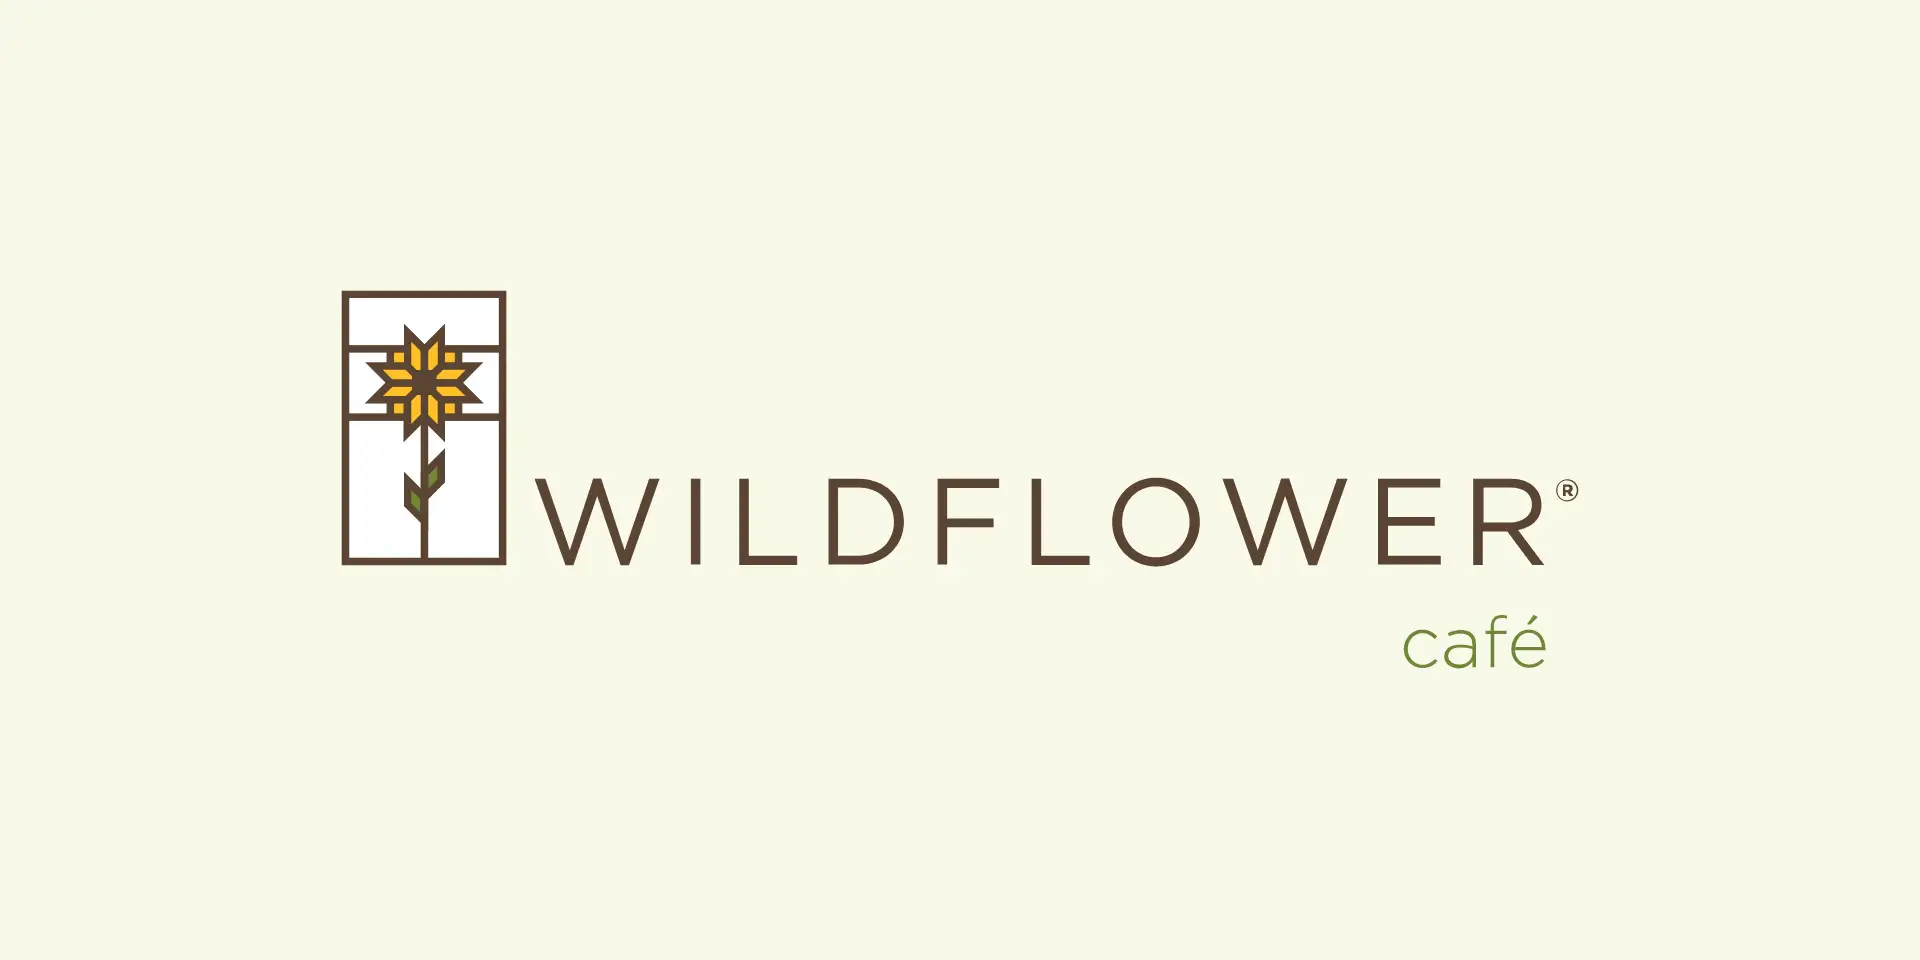 Elmhurst Hospital Wildflower Cafe logo